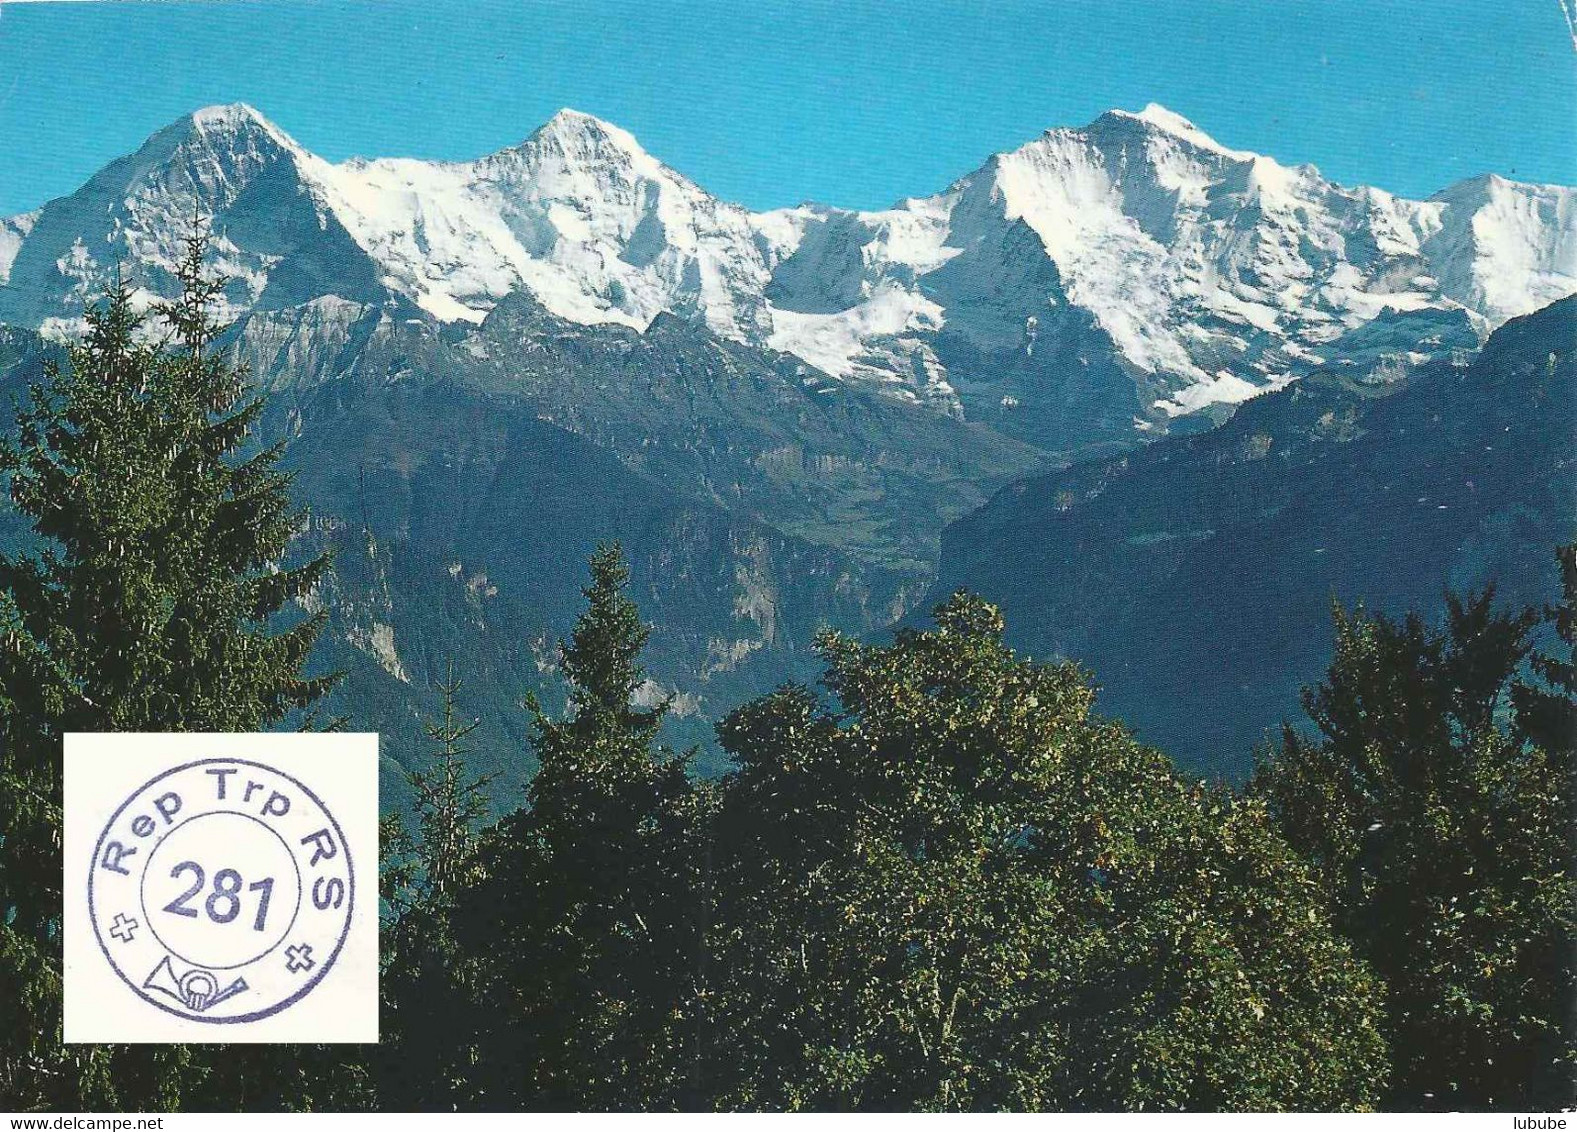 AK  "Eiger, Mönch, Jungfrau"  (Rep Trp RS 281 Feldpost)         Ca. 1980 - Sellados